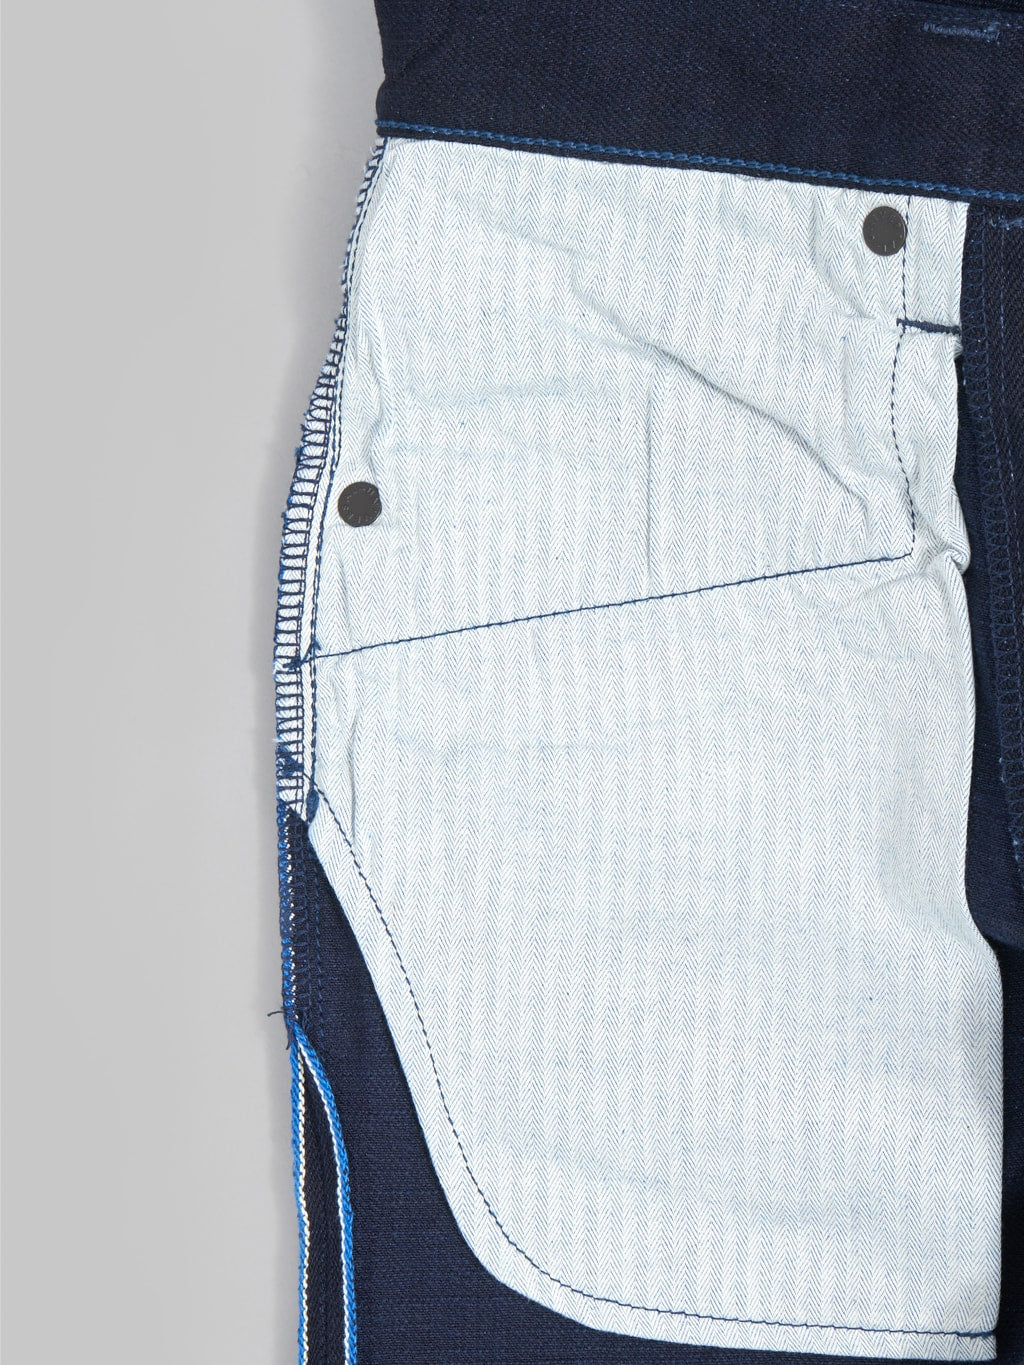 Tanuki IDR "Indigo x Indigo" 15oz Regular Straight Jeans